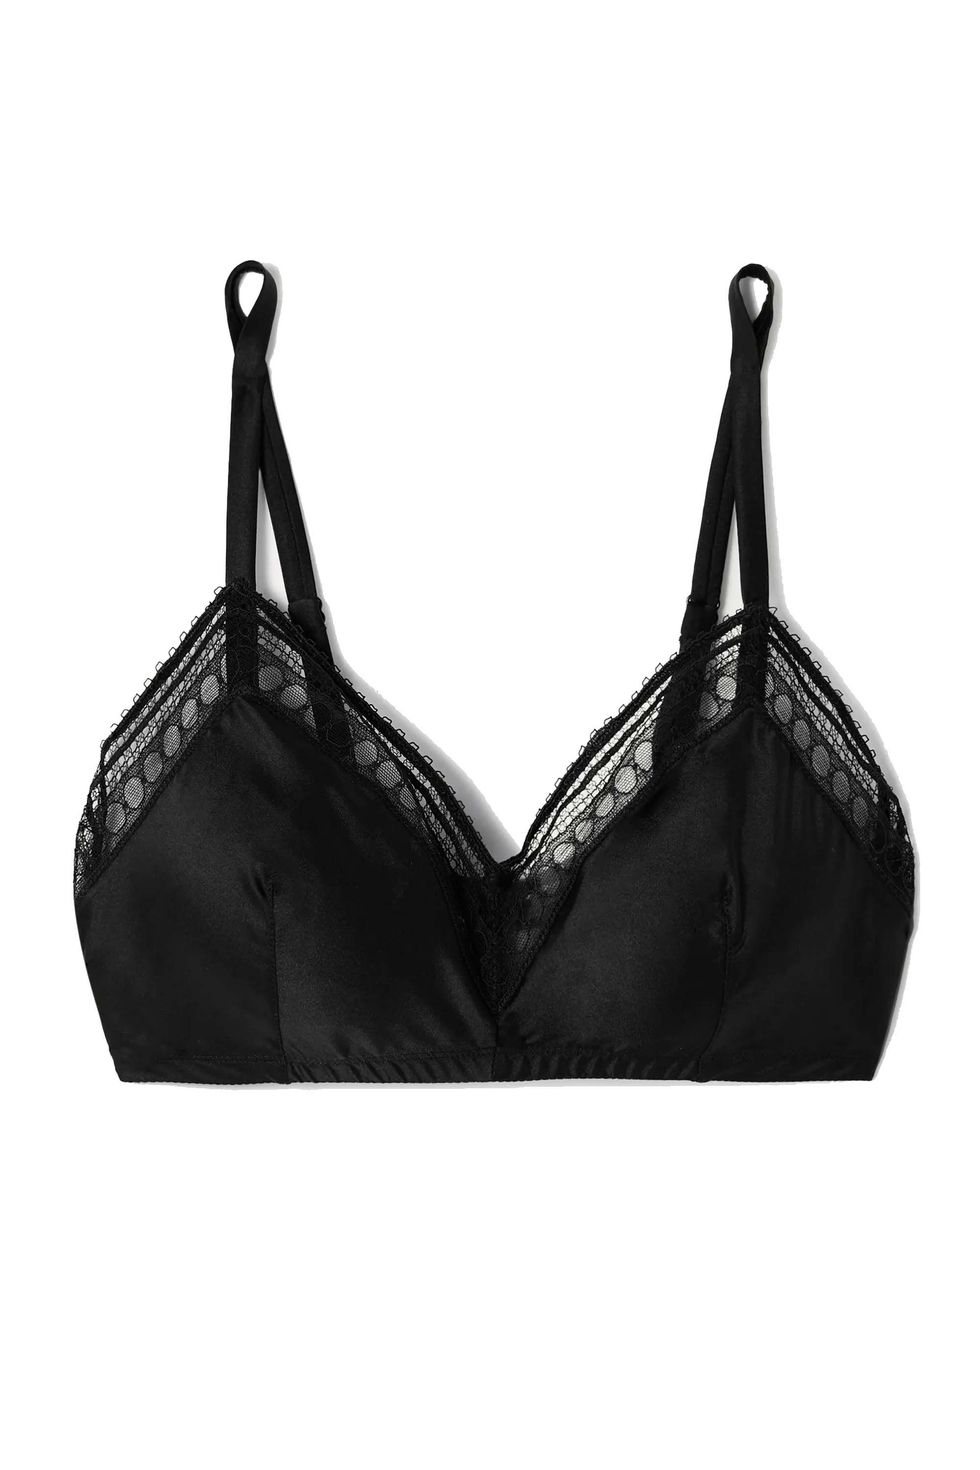 Bras N Things - Women's Underwear & Lingerie - 25 products